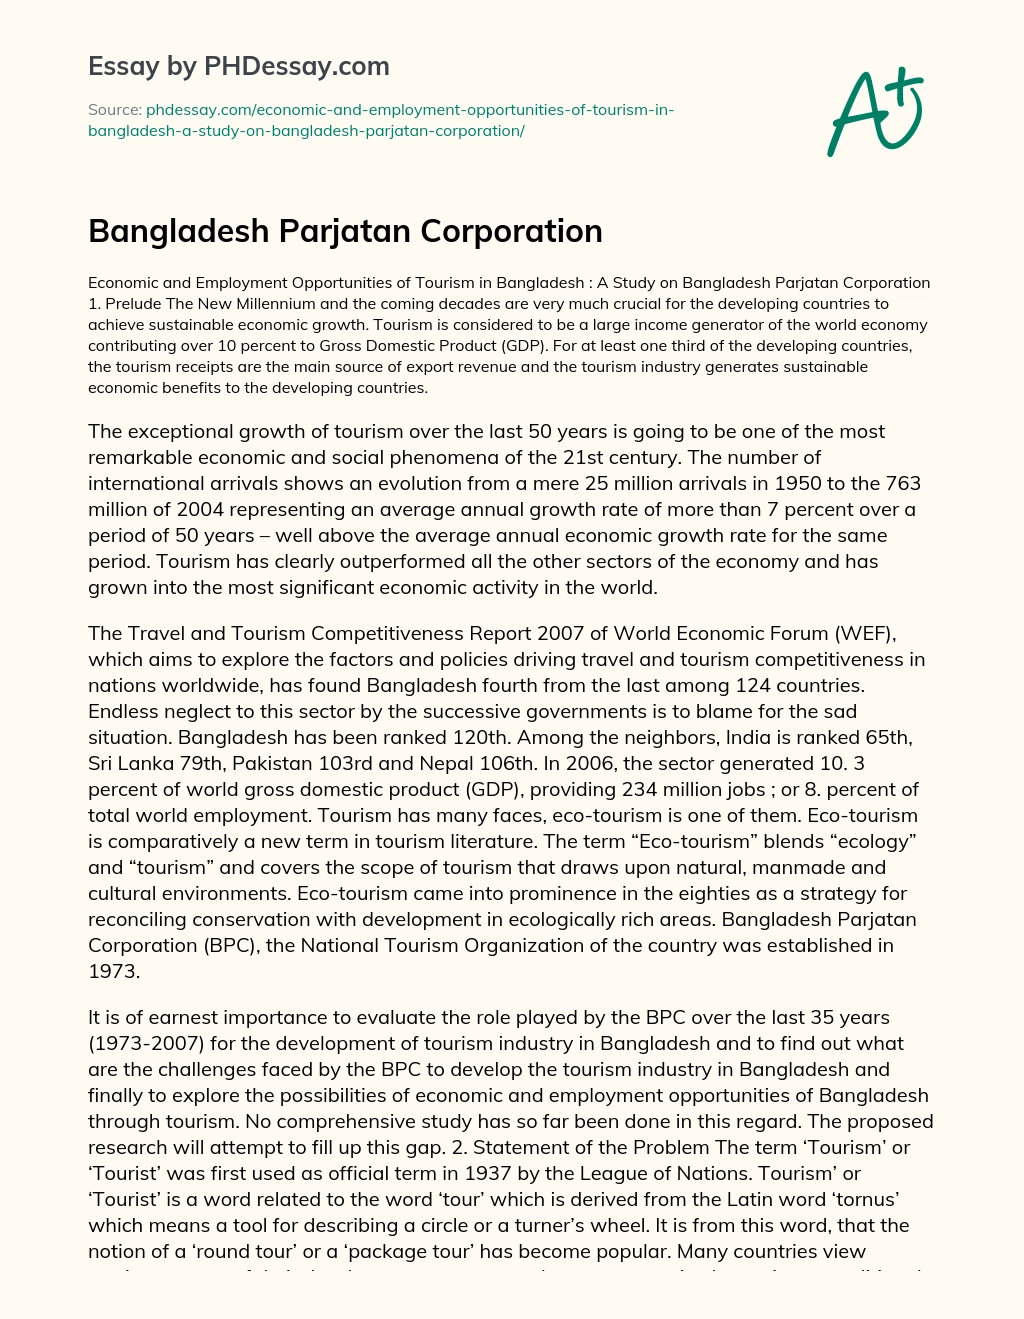 Bangladesh Parjatan Corporation essay